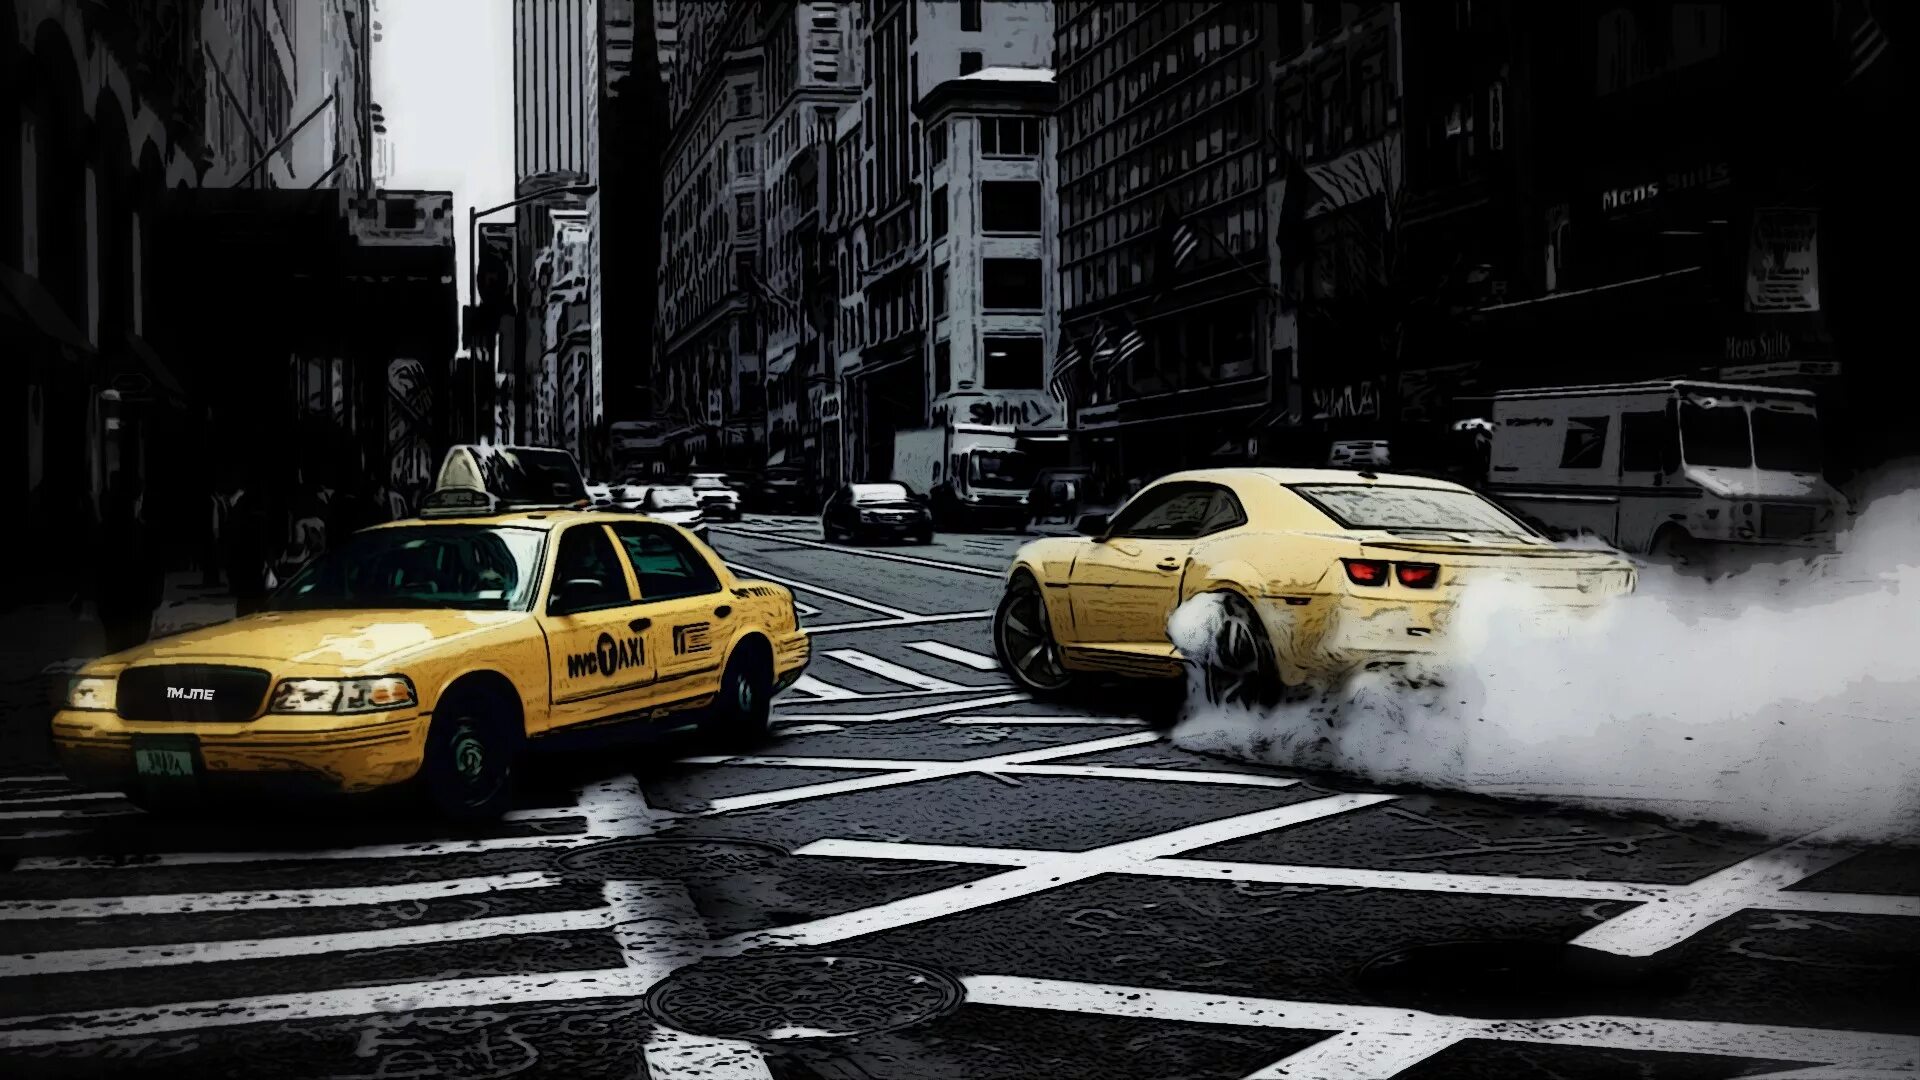 Таксопарк в Нью-Йорке. Дрифт в Нью-Йорке. Нью-Йоркское такси / Taxi.. They driving to new york